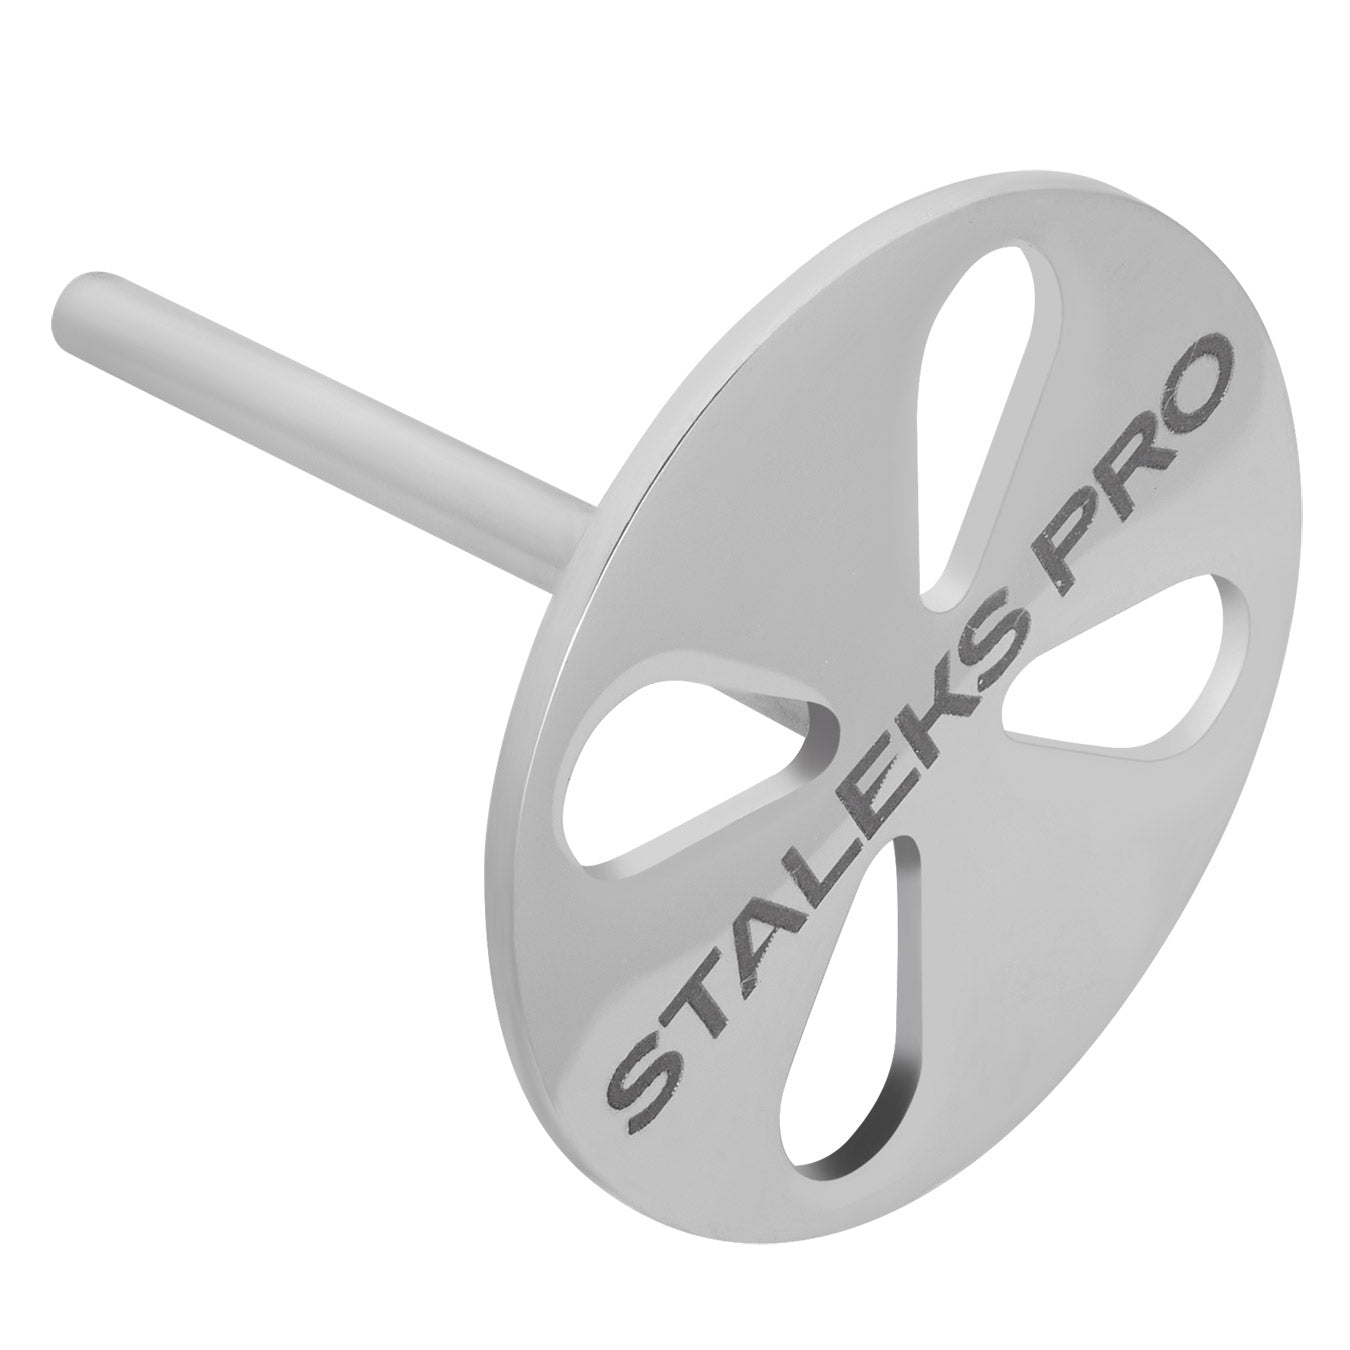 Staleks Pro Pedicure Disc Pododisc And Set Of Disposable Files 180 Grit (5 Pcs)